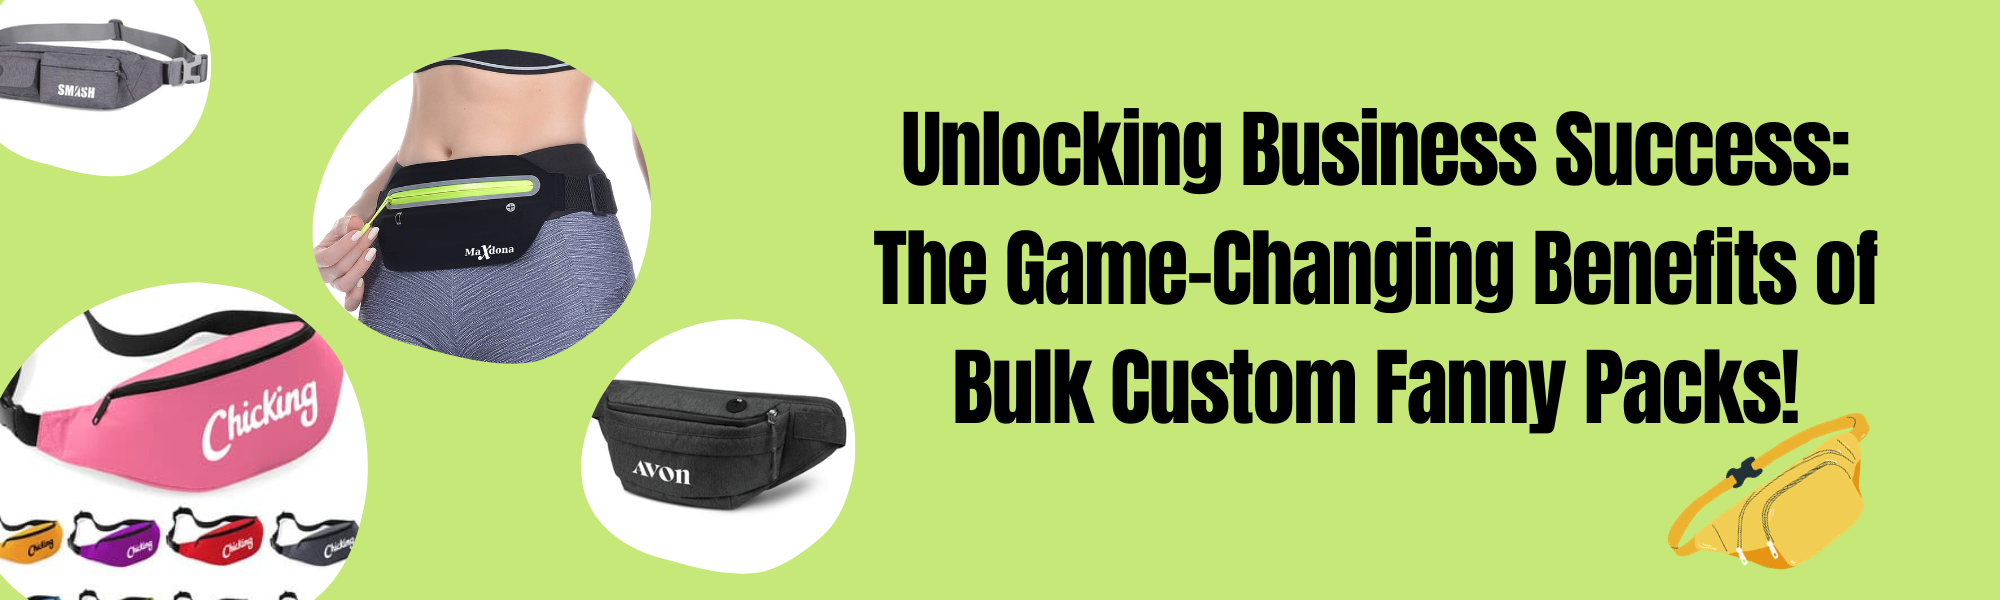 The Game-Changing Benefits of Bulk Custom Fanny Packs